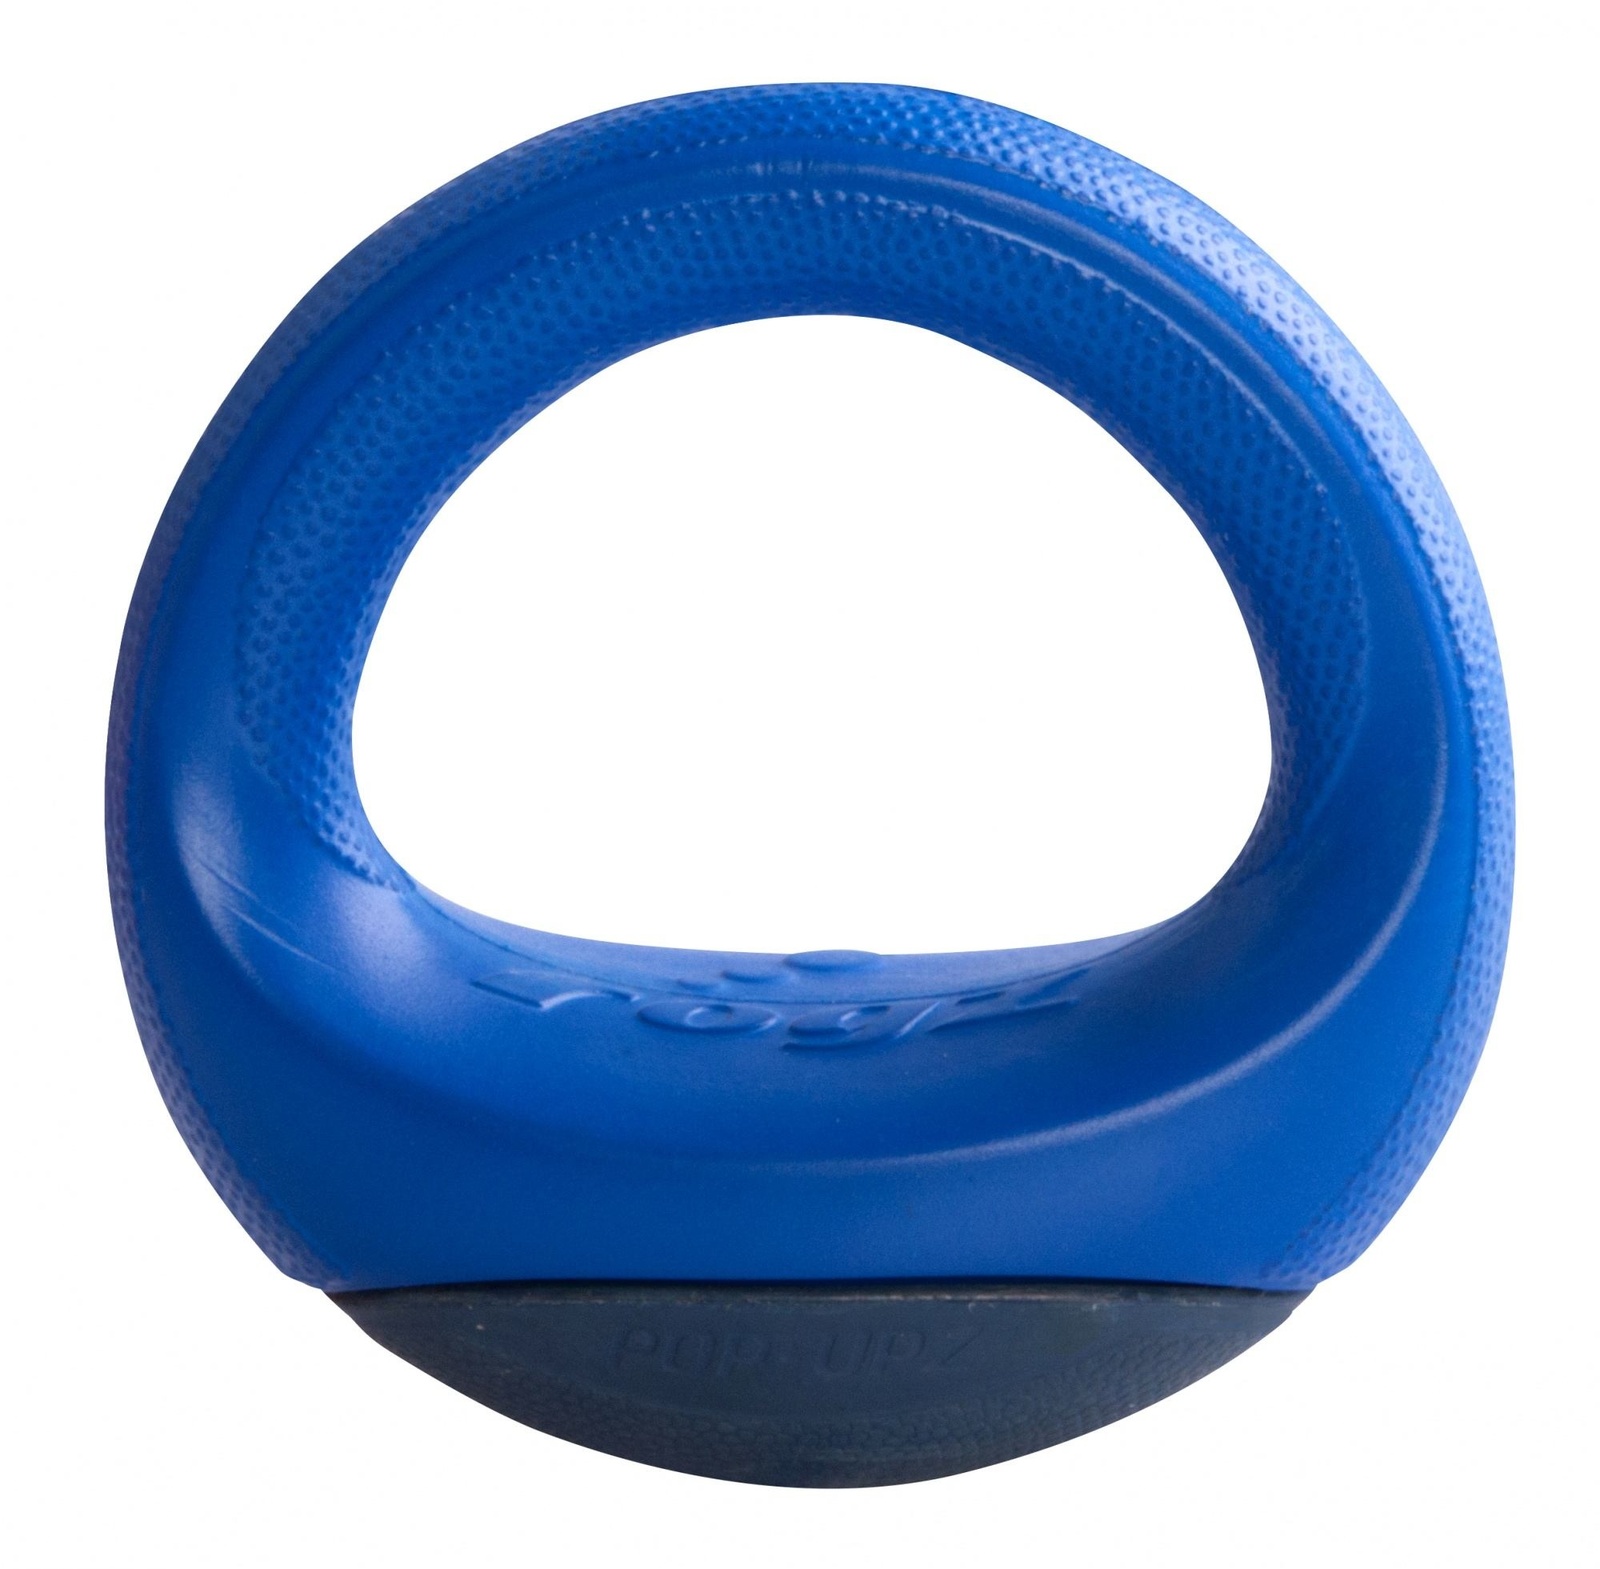 Rogz Rogz игрушка для собак кольцо-неваляшка, синий (M) rogz мяч поймай меня squeekz прыгает на земле плавает в воде 64 мм синий